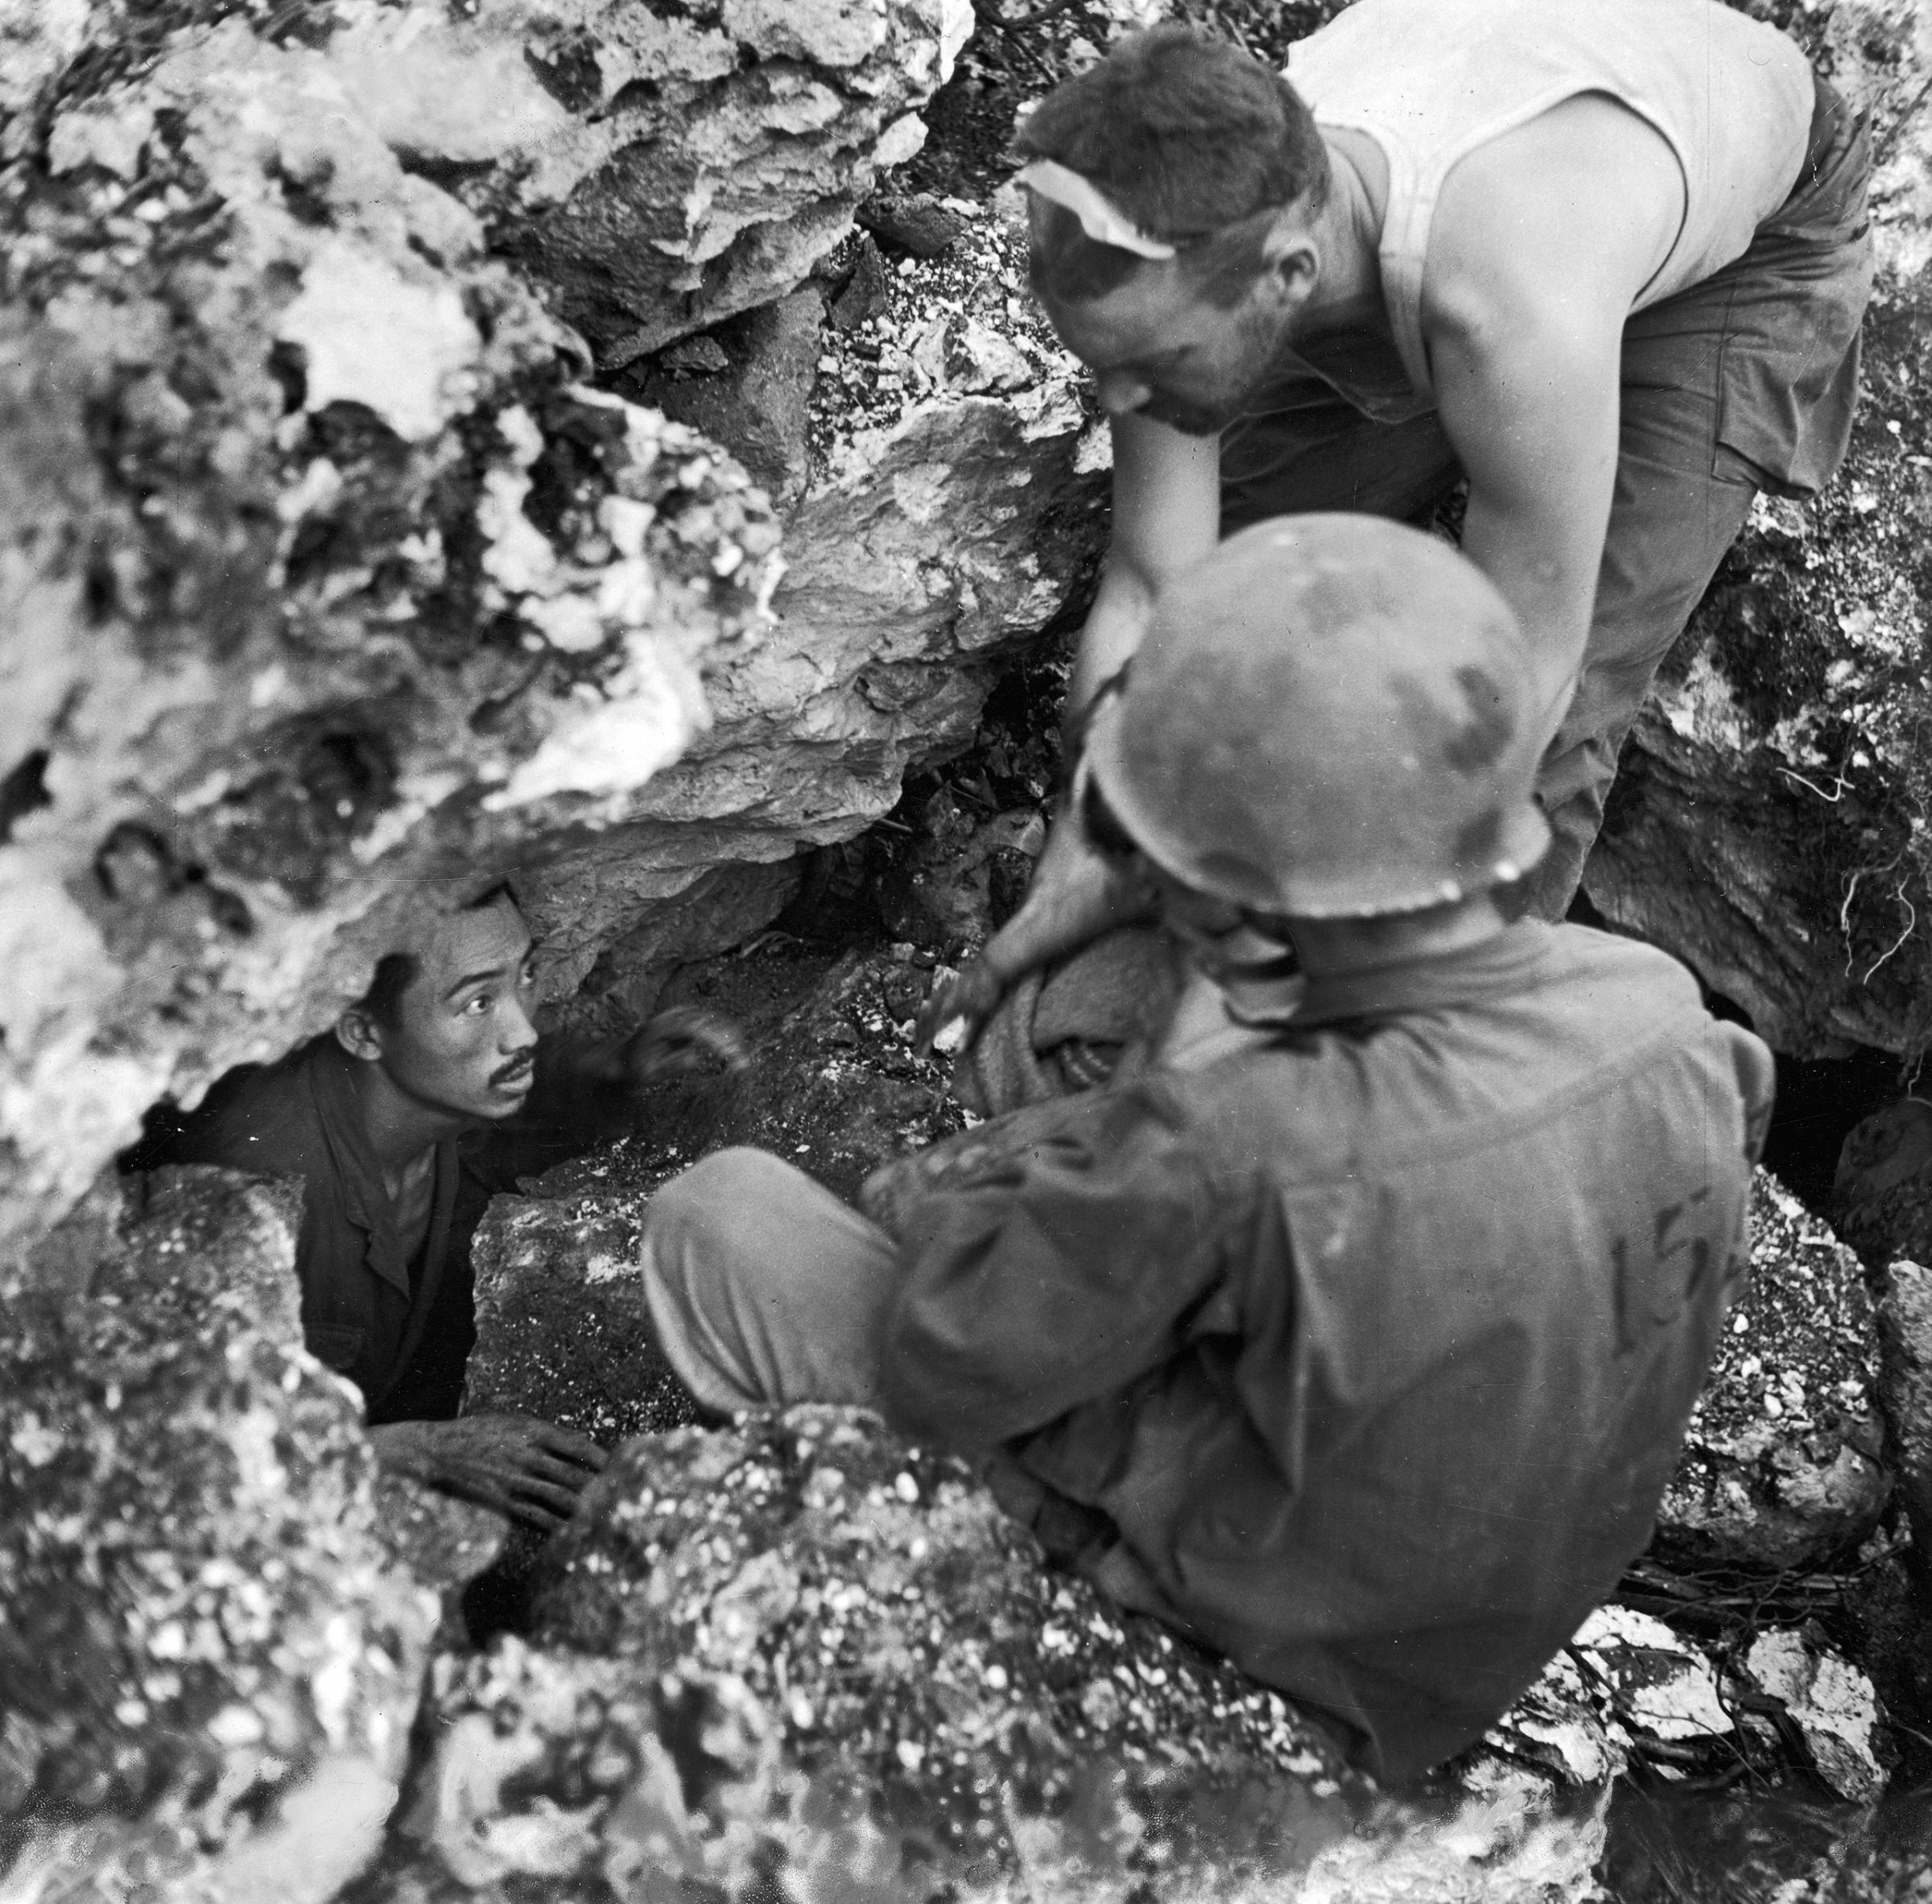 World War II Battle of Saipan photographed by W. Eugene Smith 1944.